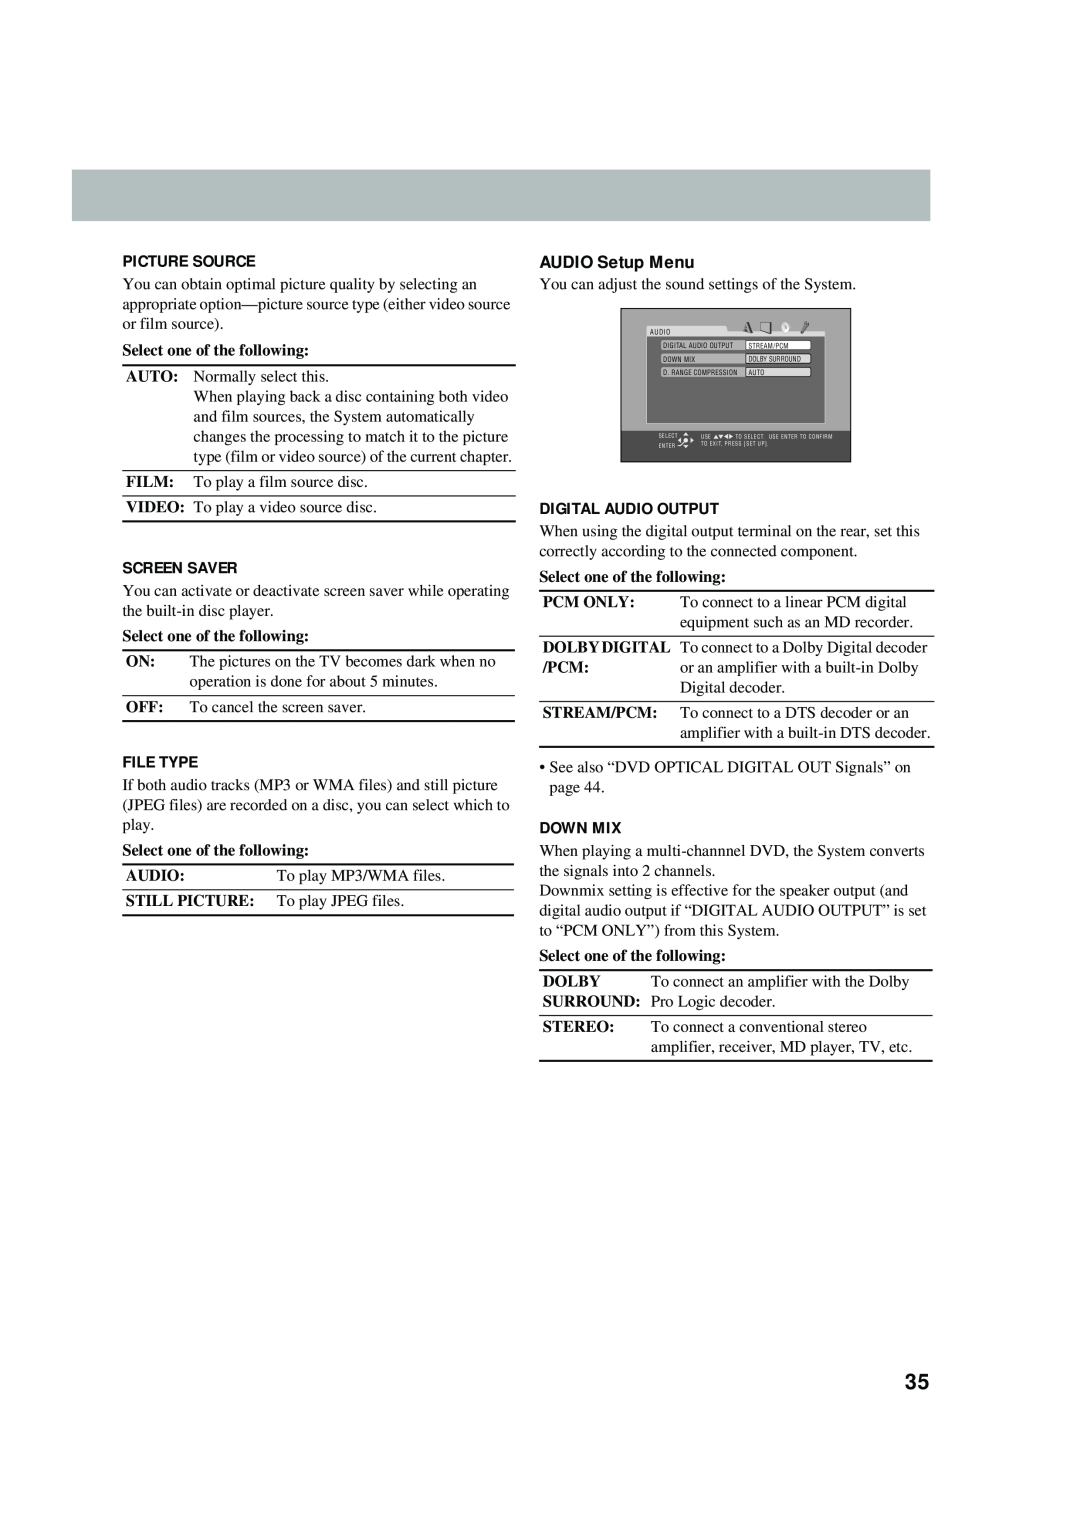 JVC UX-P550 manual AUDIO Setup Menu, Picture Source, Screen Saver, File Type, Digital Audio Output, Down Mix 